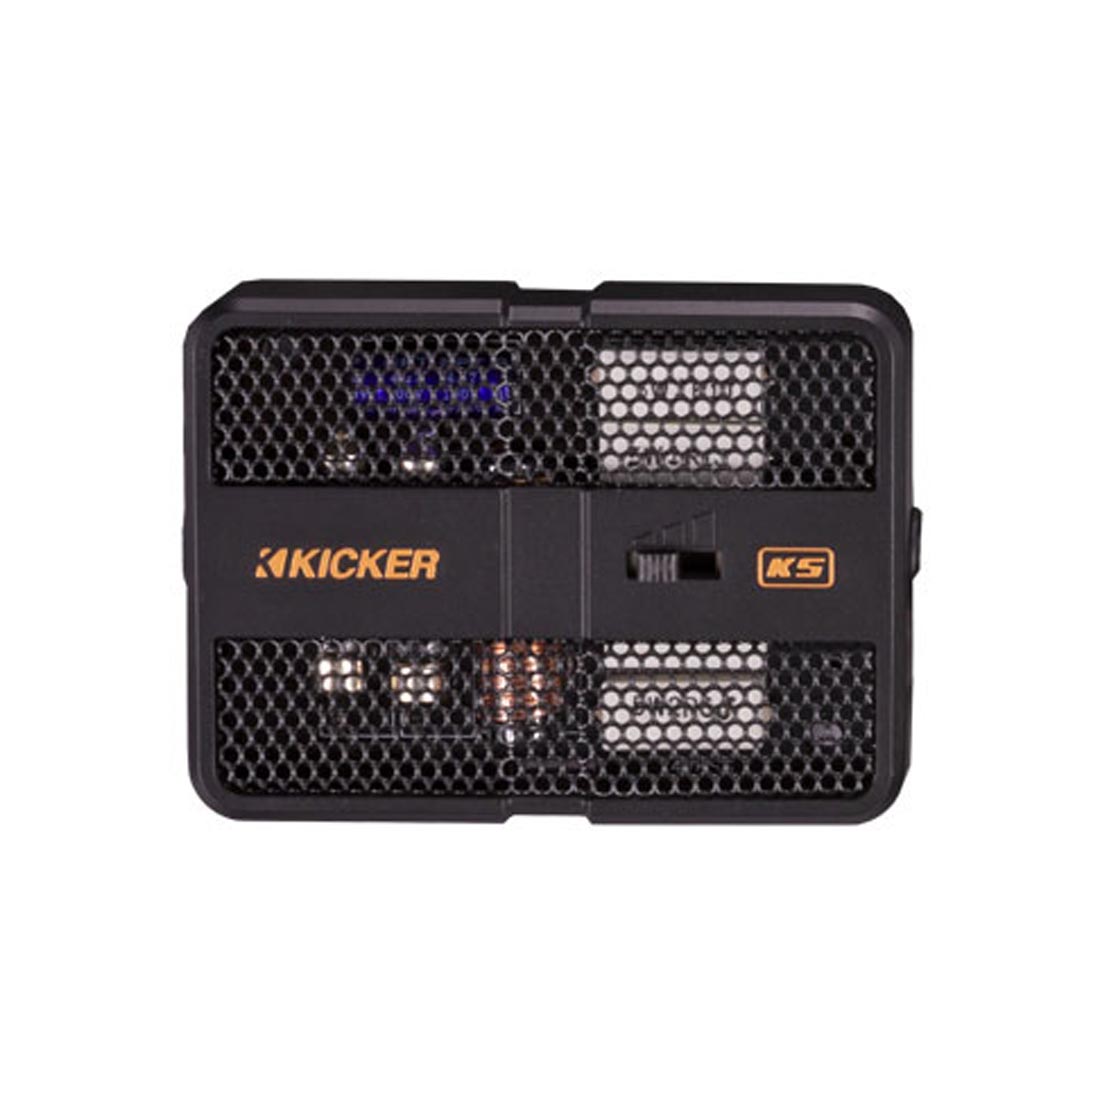 Kicker 47KSS6504 KS Series 6.5" Component Speaker System